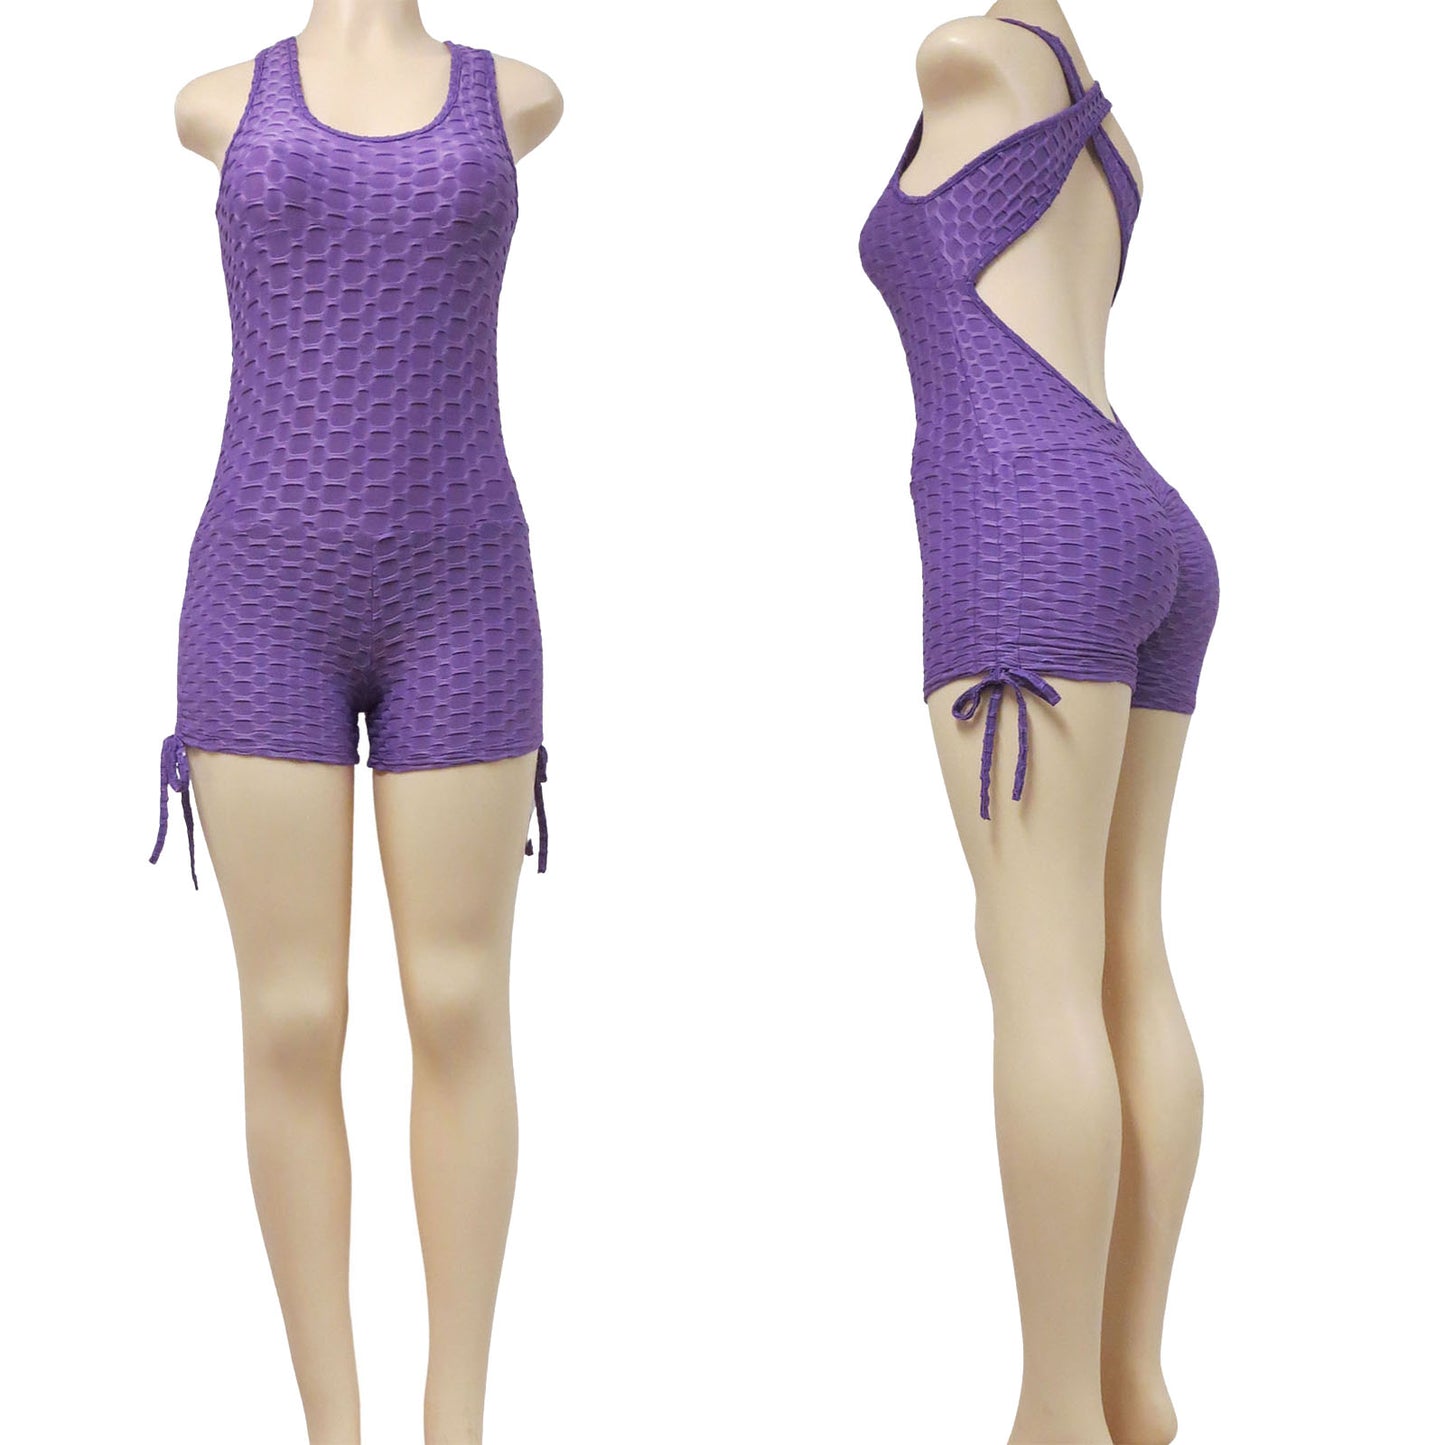 tiktok booty shorts jumper wholesale in purple bubble print